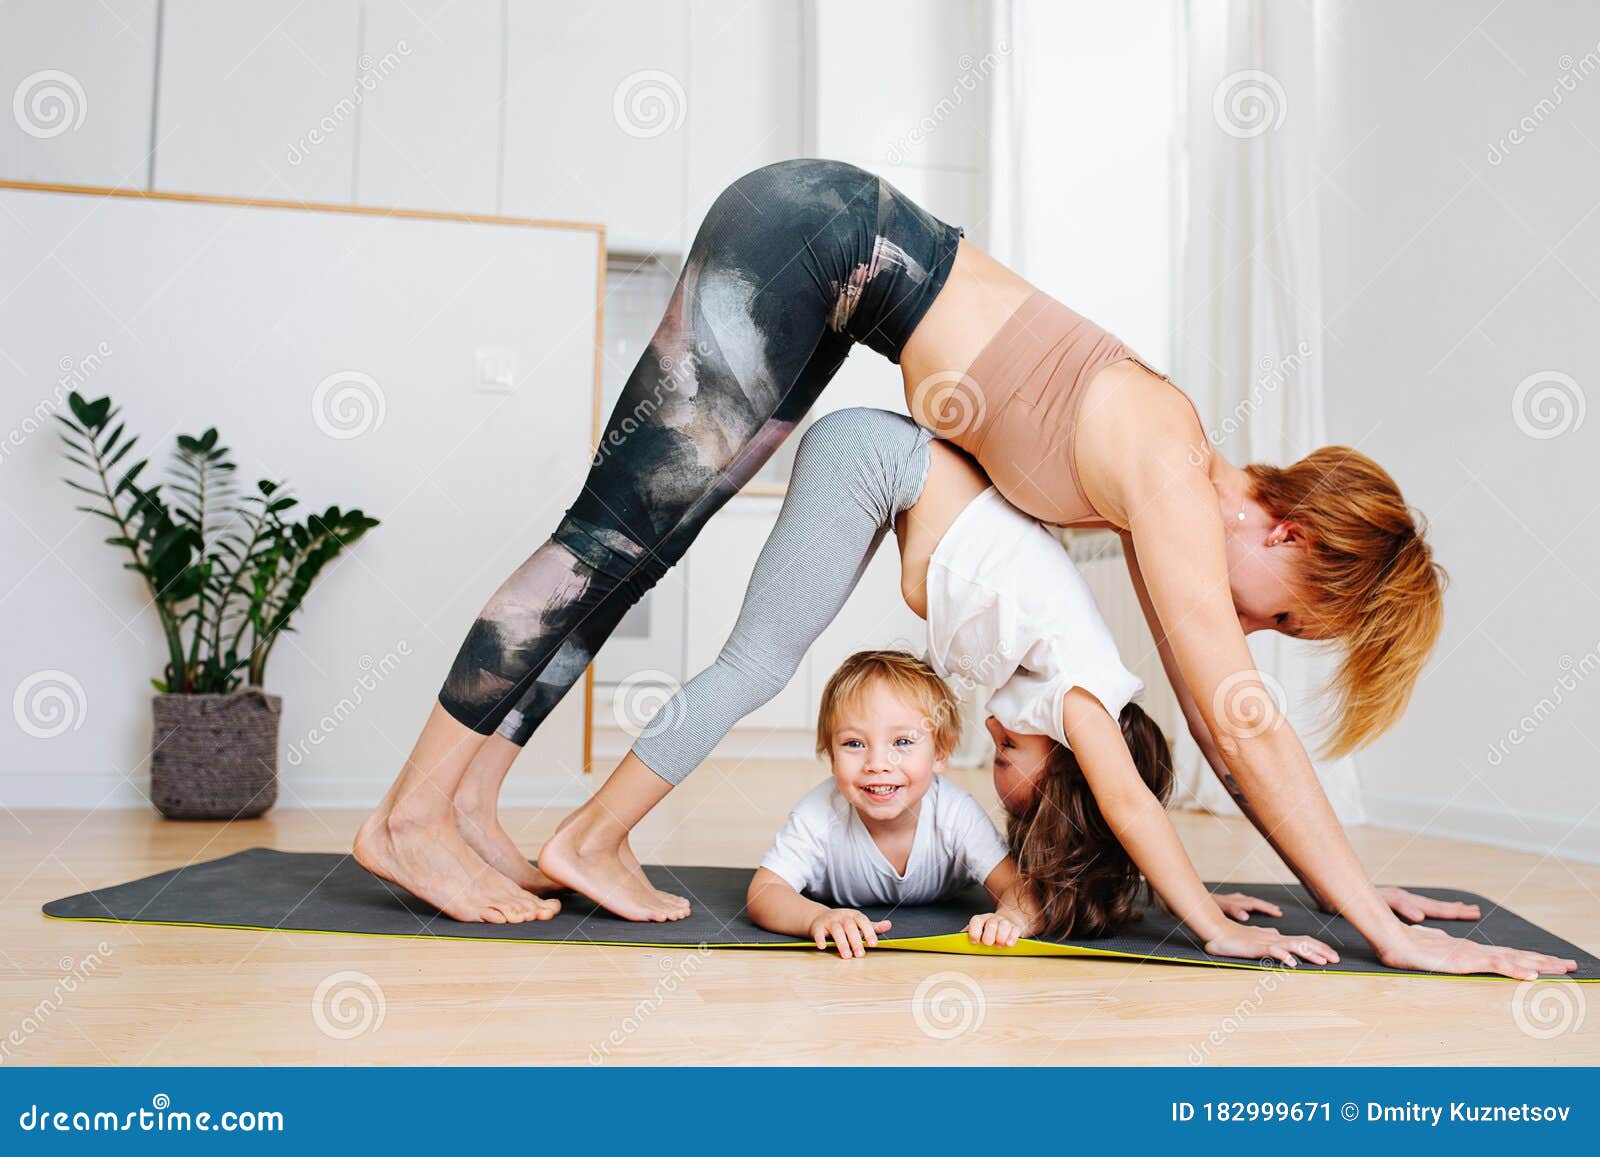 yoga asanas: Easy yoga asanas to ease back pain | EconomicTimes